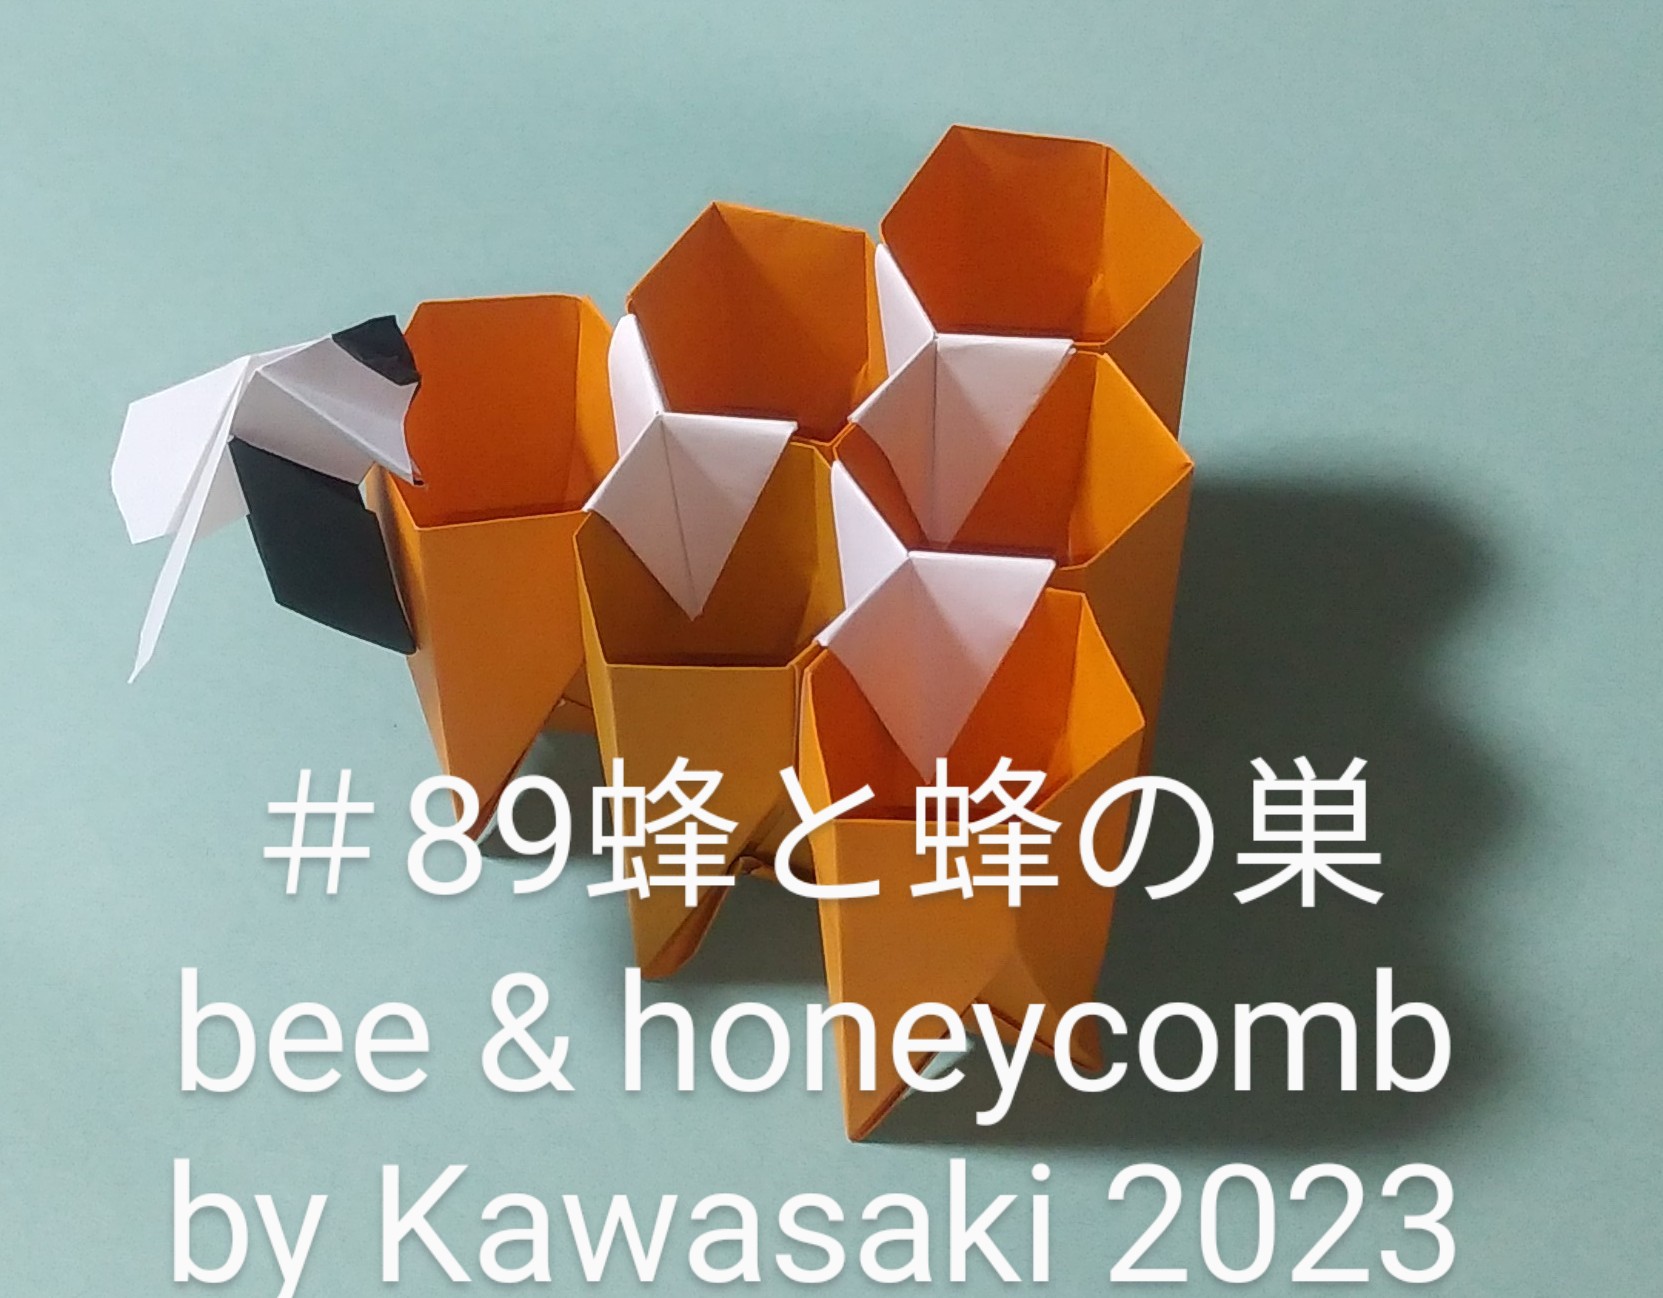 2023/10/03(Tue) 23:36「89蜂と蜂の巣 bee & honeycomb  (作2023年10月3日22:27) 」川崎敏和 T.Kawasaki
（創作者 Author：川崎敏和 T.Kawasaki,　製作者 Folder：川崎敏和 T.Kawasaki ,　出典 Source：2023年川崎敏和折り紙キット＃89）
 ＃87蜂の巣に蜂をとまらせました。